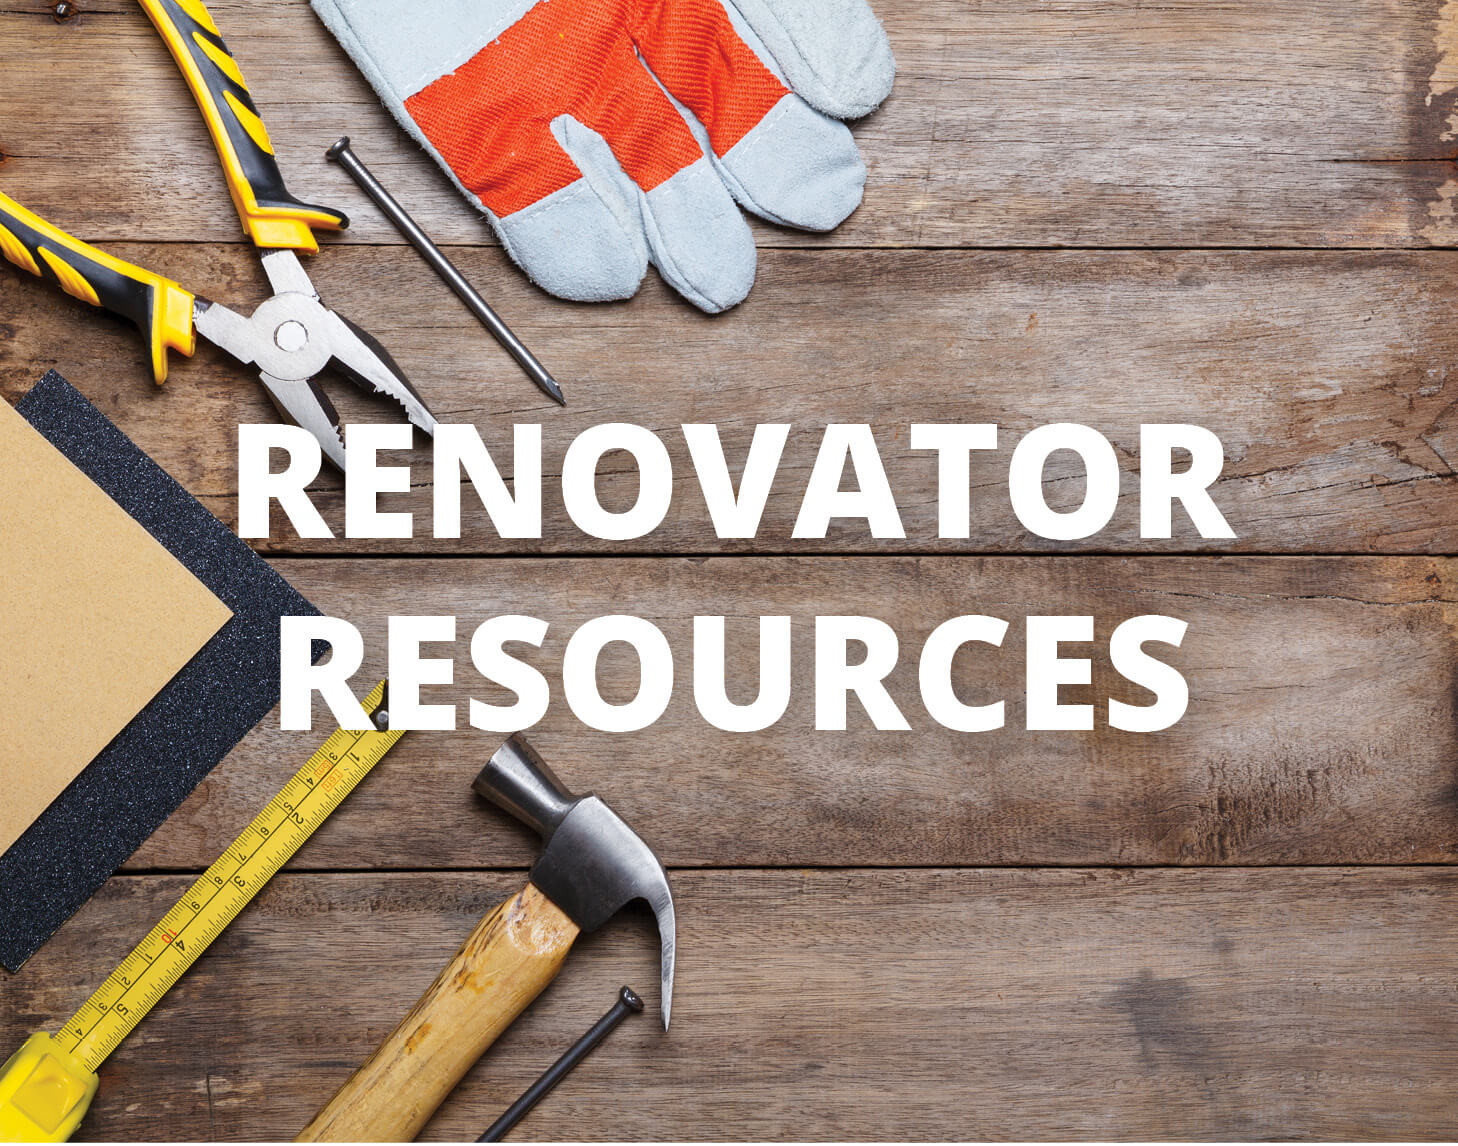 Renovator Resources